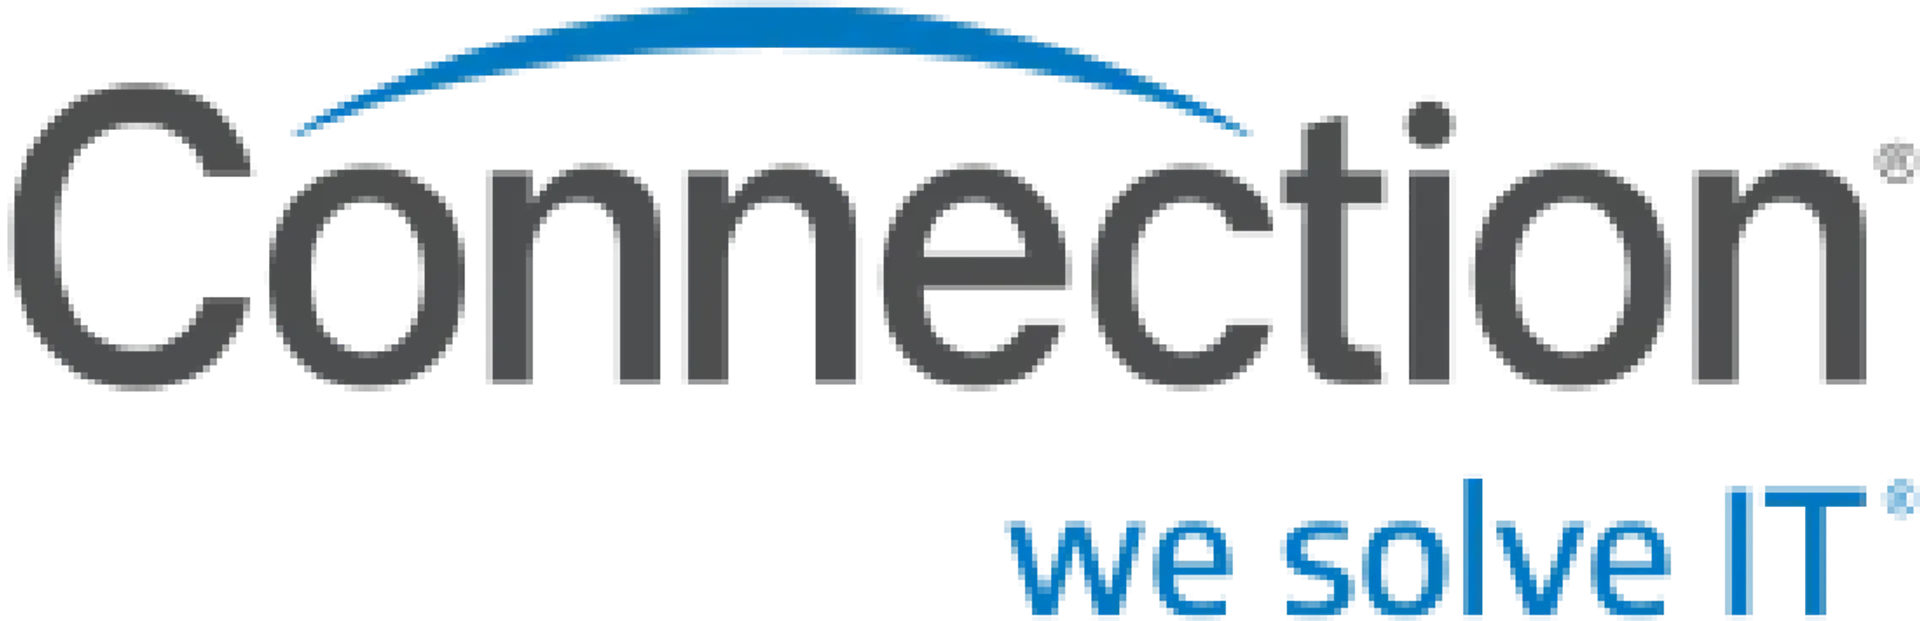 PC CONNECTION logo